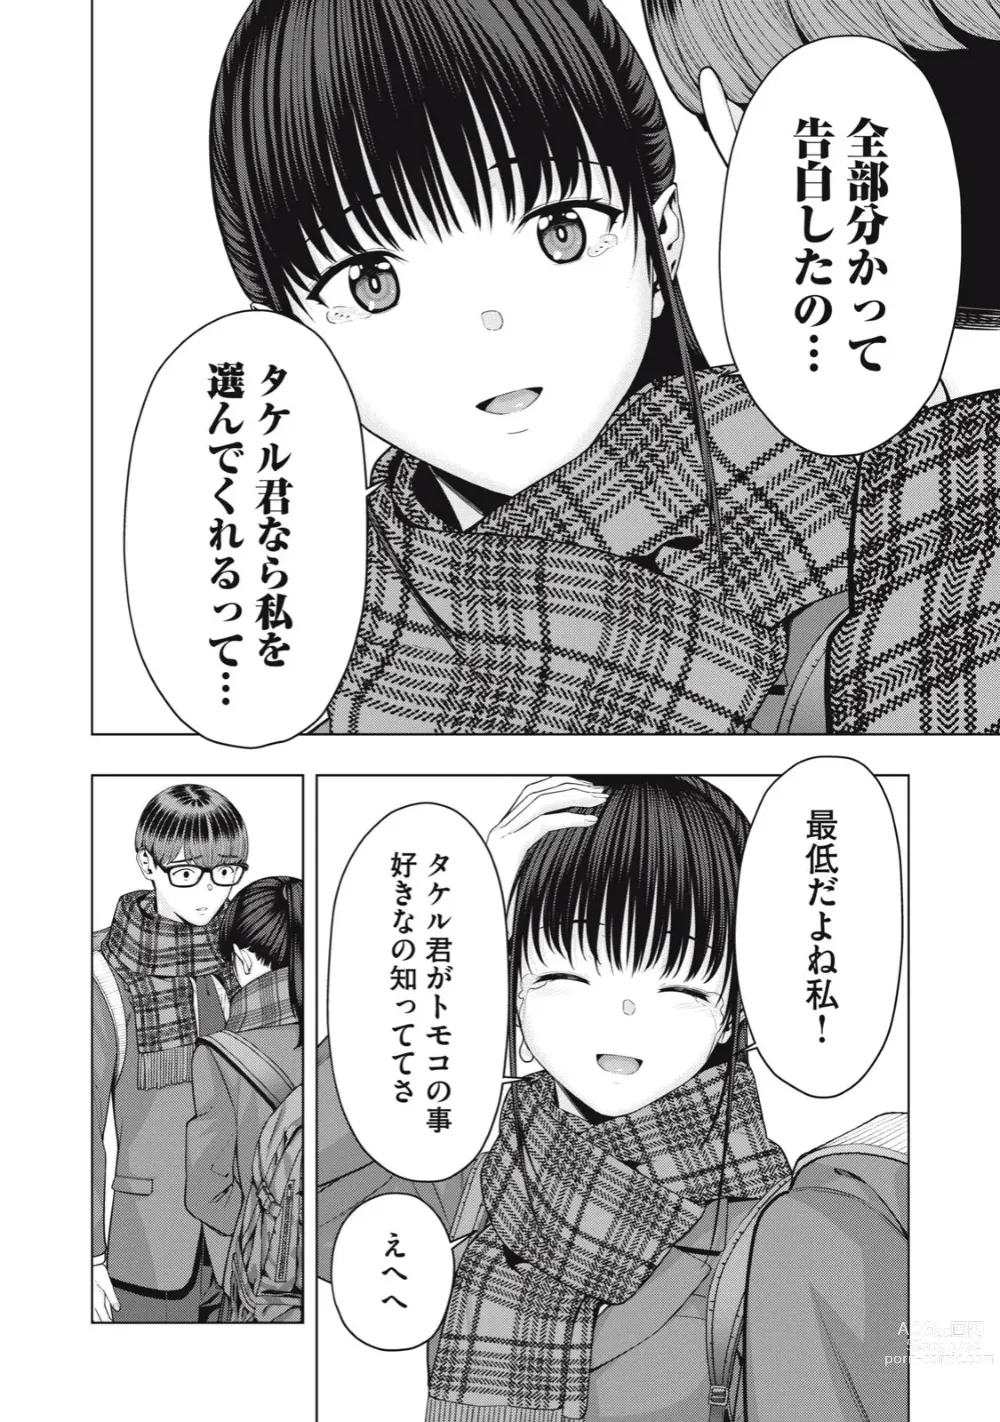 Page 582 of manga Kanojo no Tomodachi